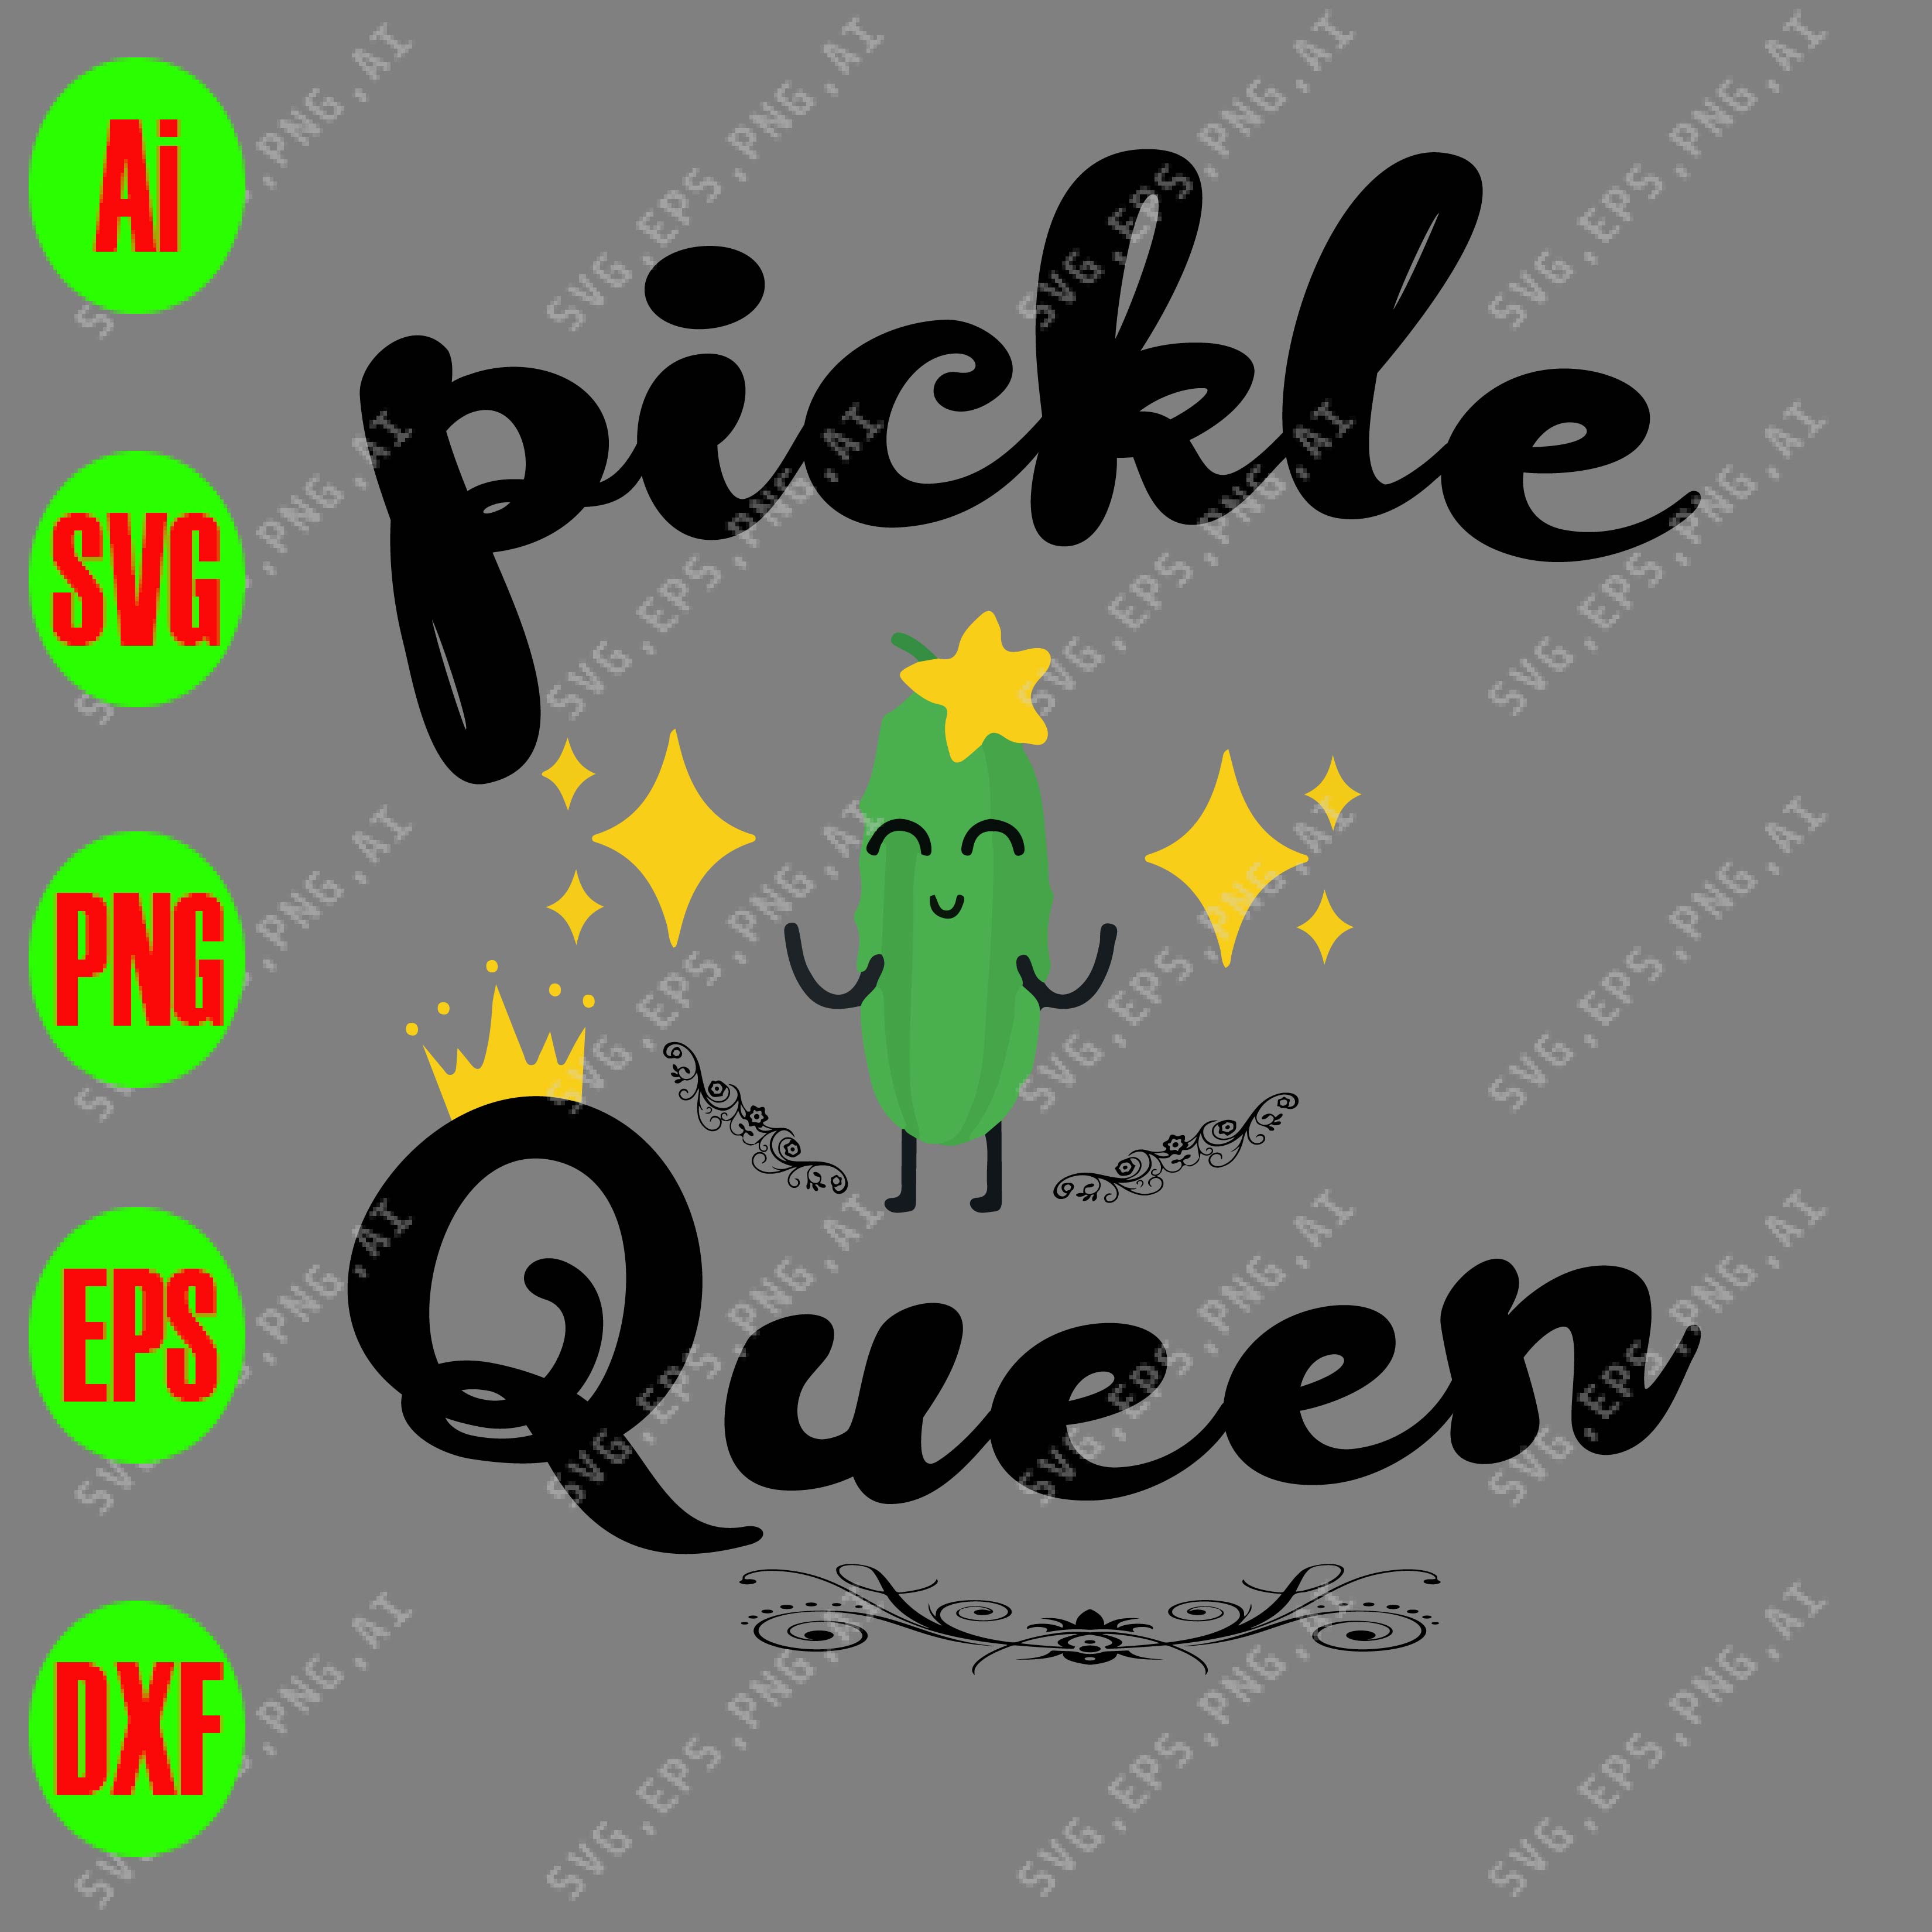 Download Pickle queen svg, dxf,eps,png, Digital Download ...